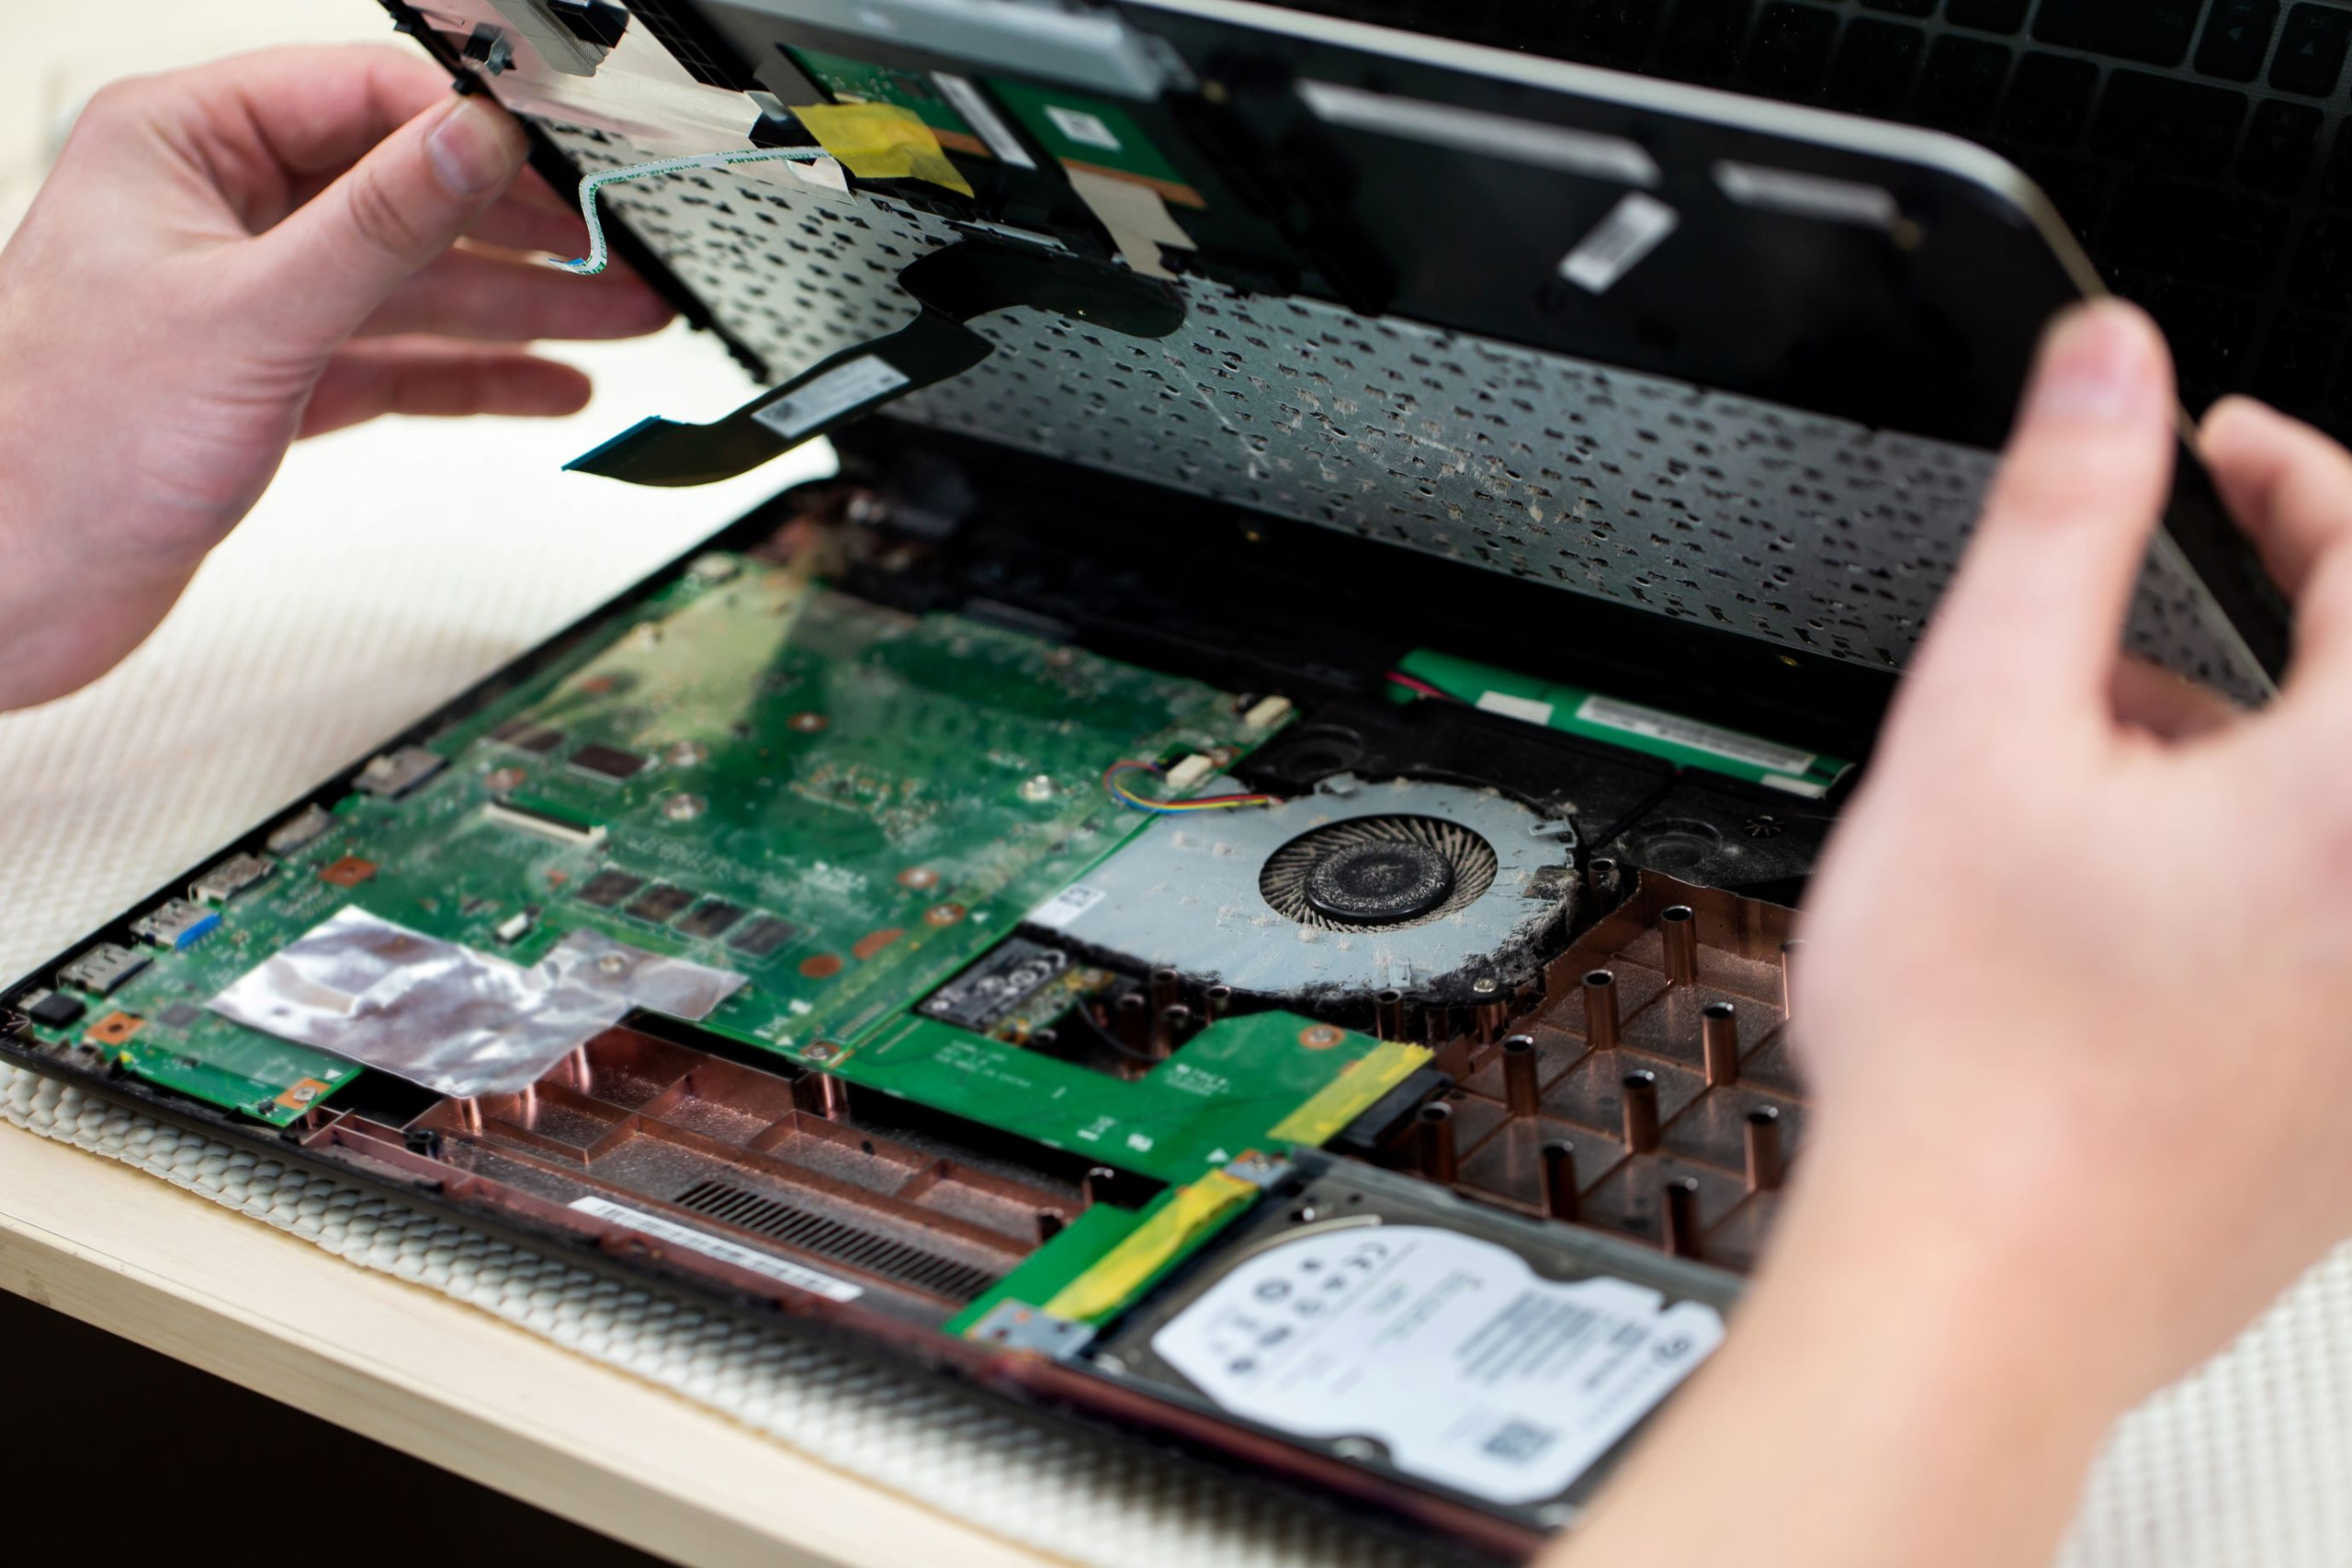 One Hour Device Repair: Instant Laptop Repair Services